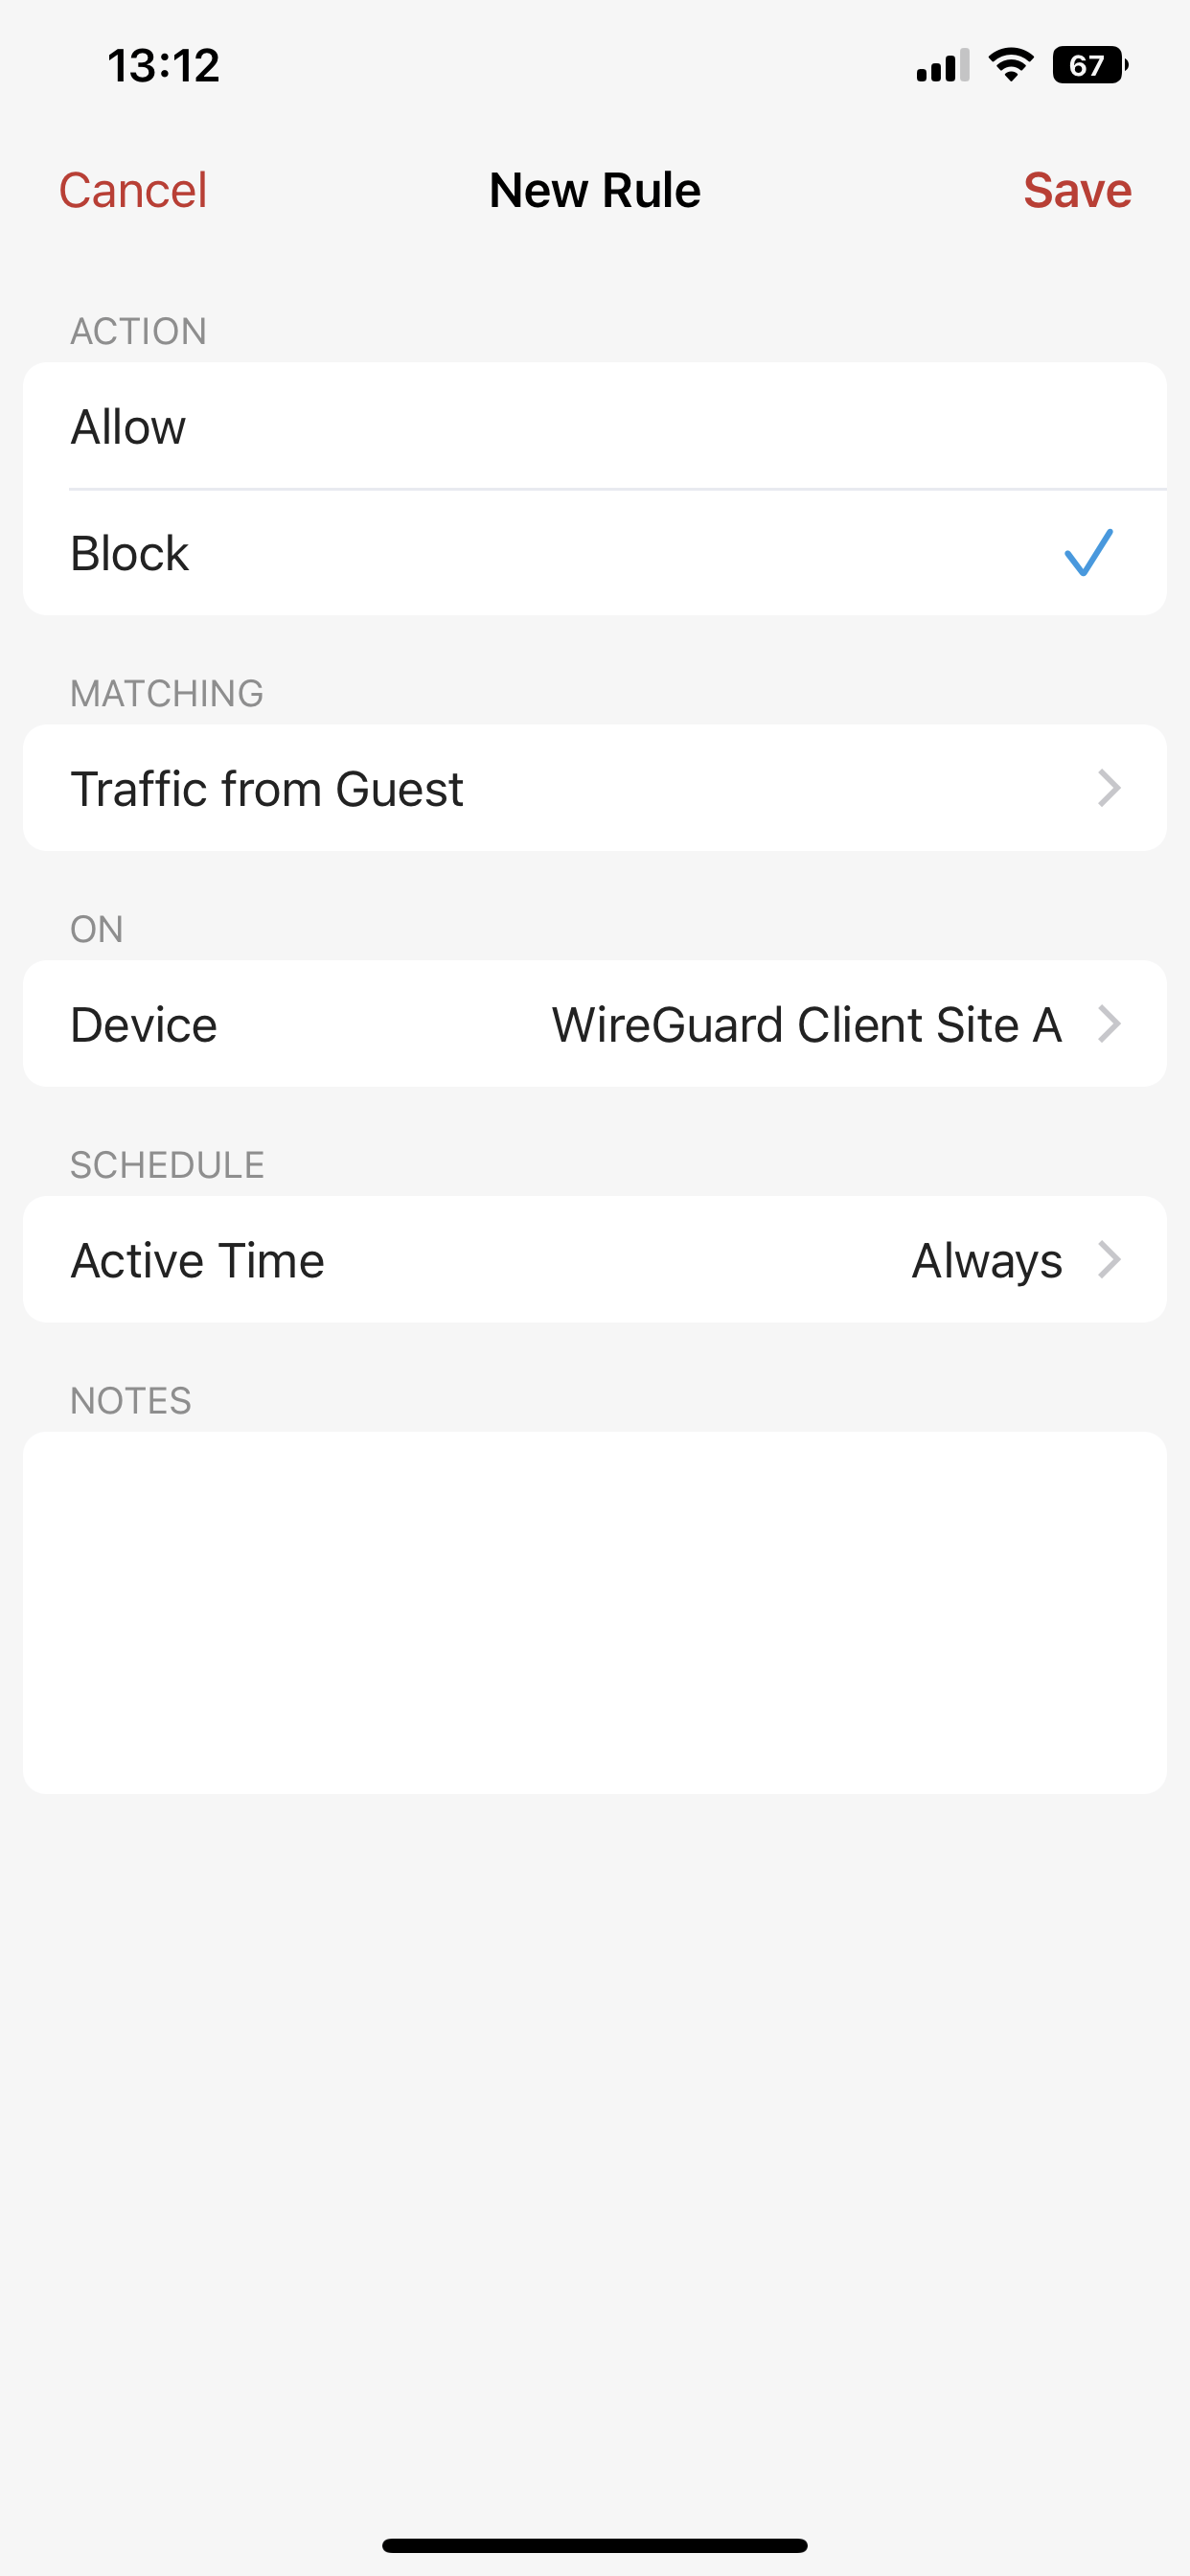 Scenario 2: In app demo if you are using WireGuard protocol